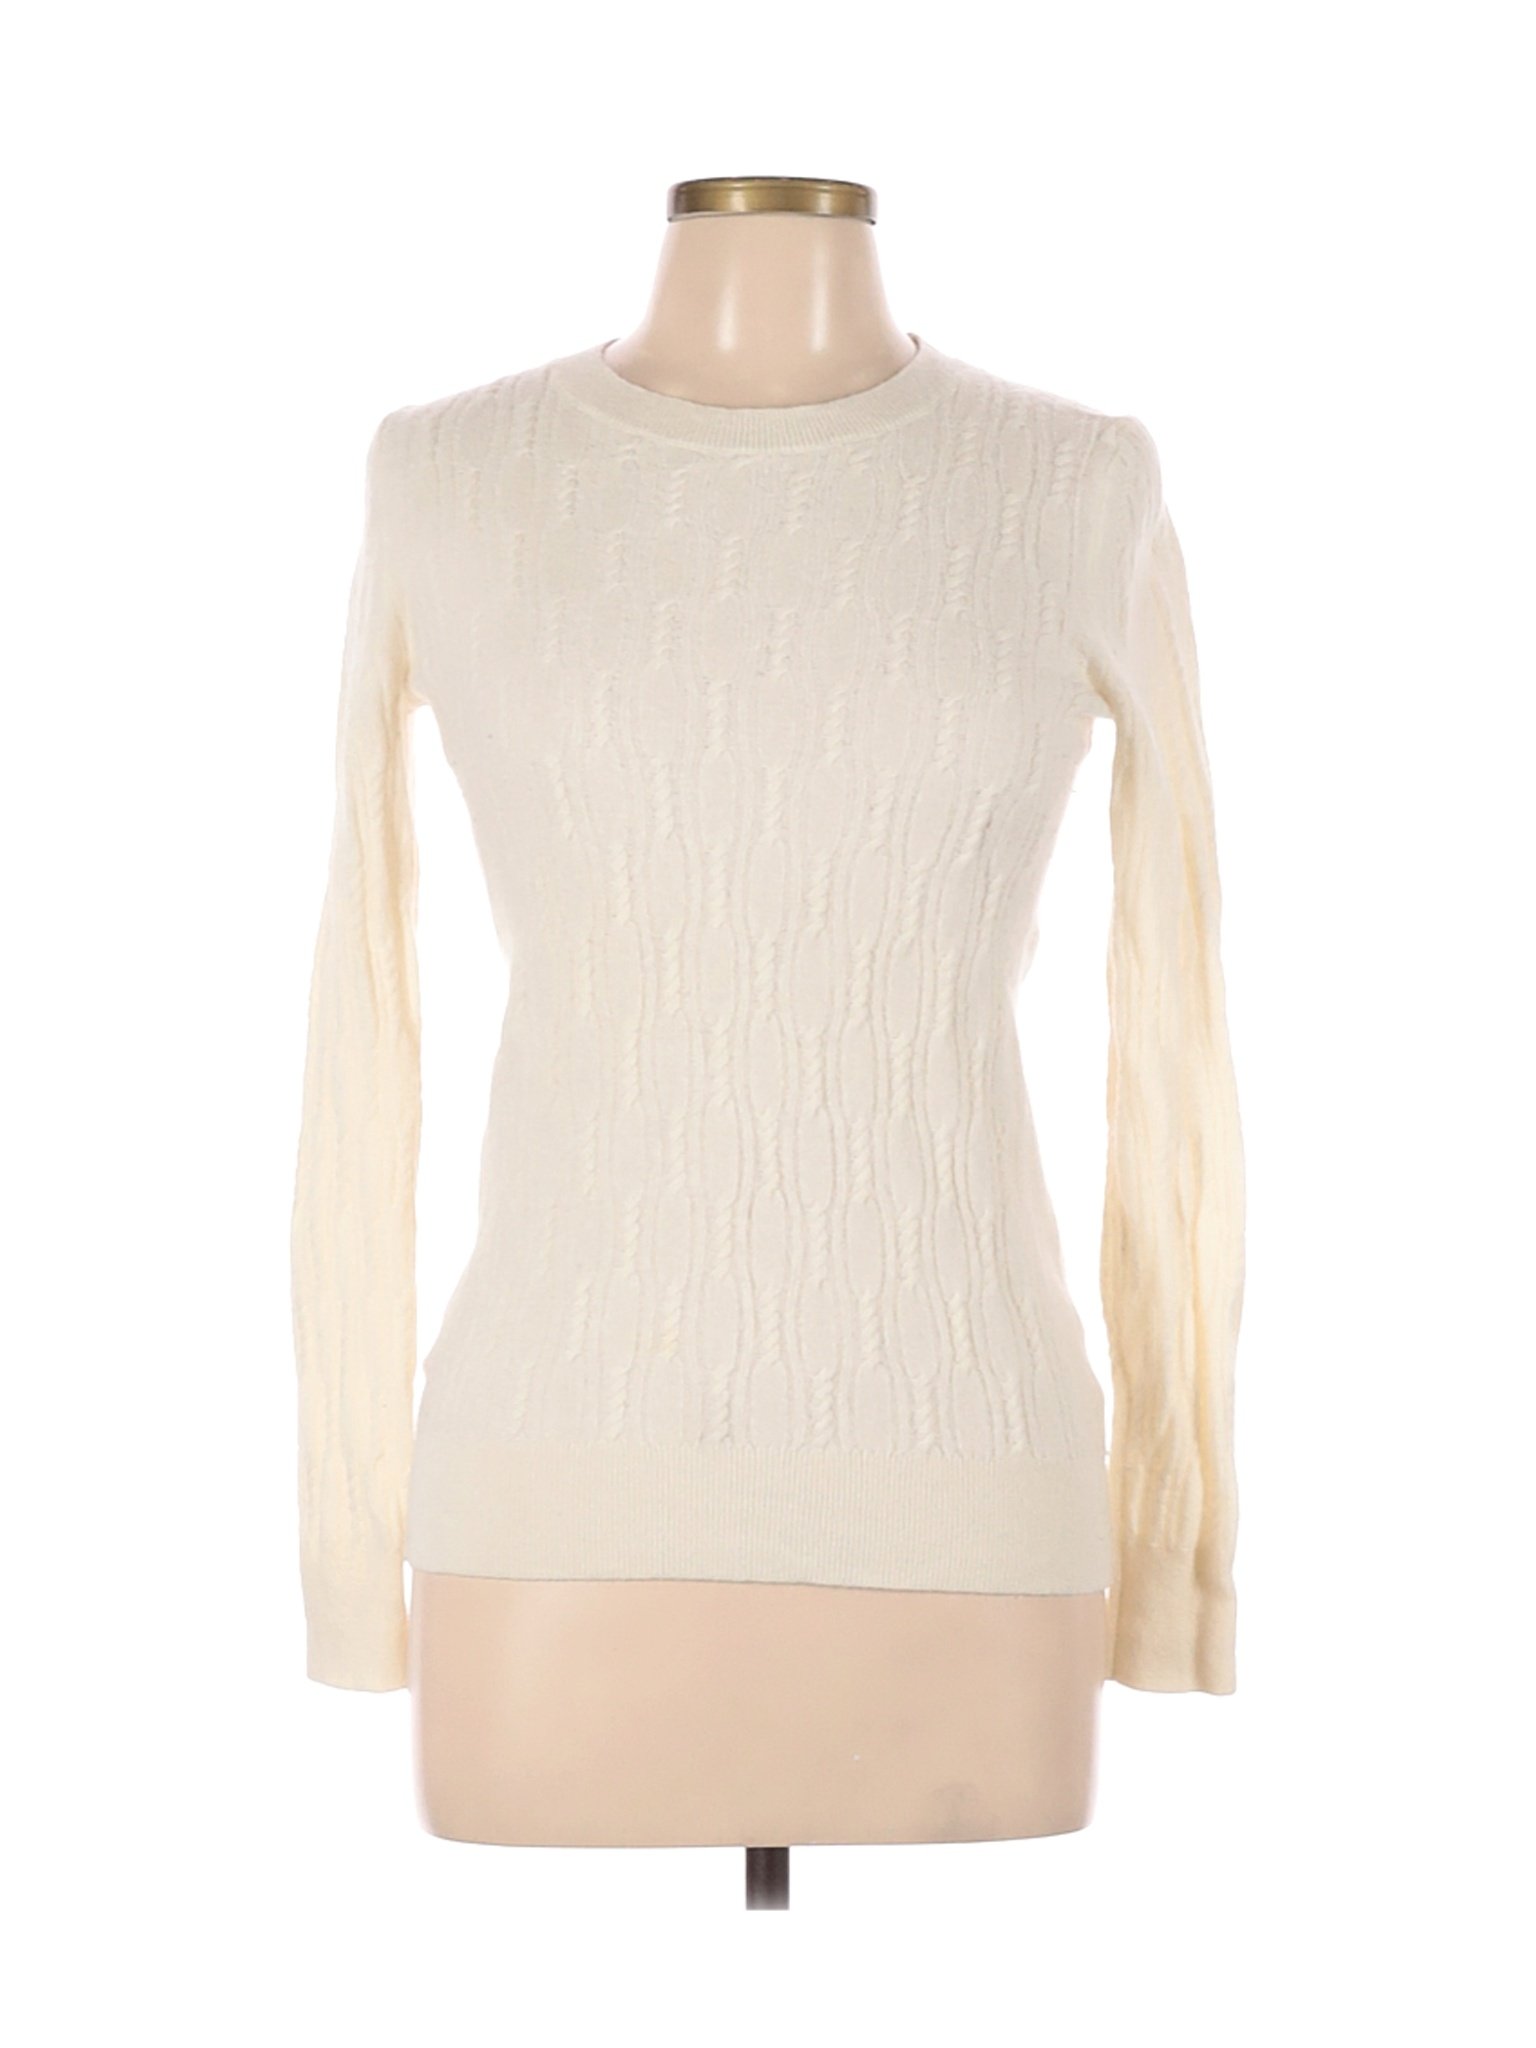 Banana Republic Filpucci Women Ivory Pullover Sweater M | eBay